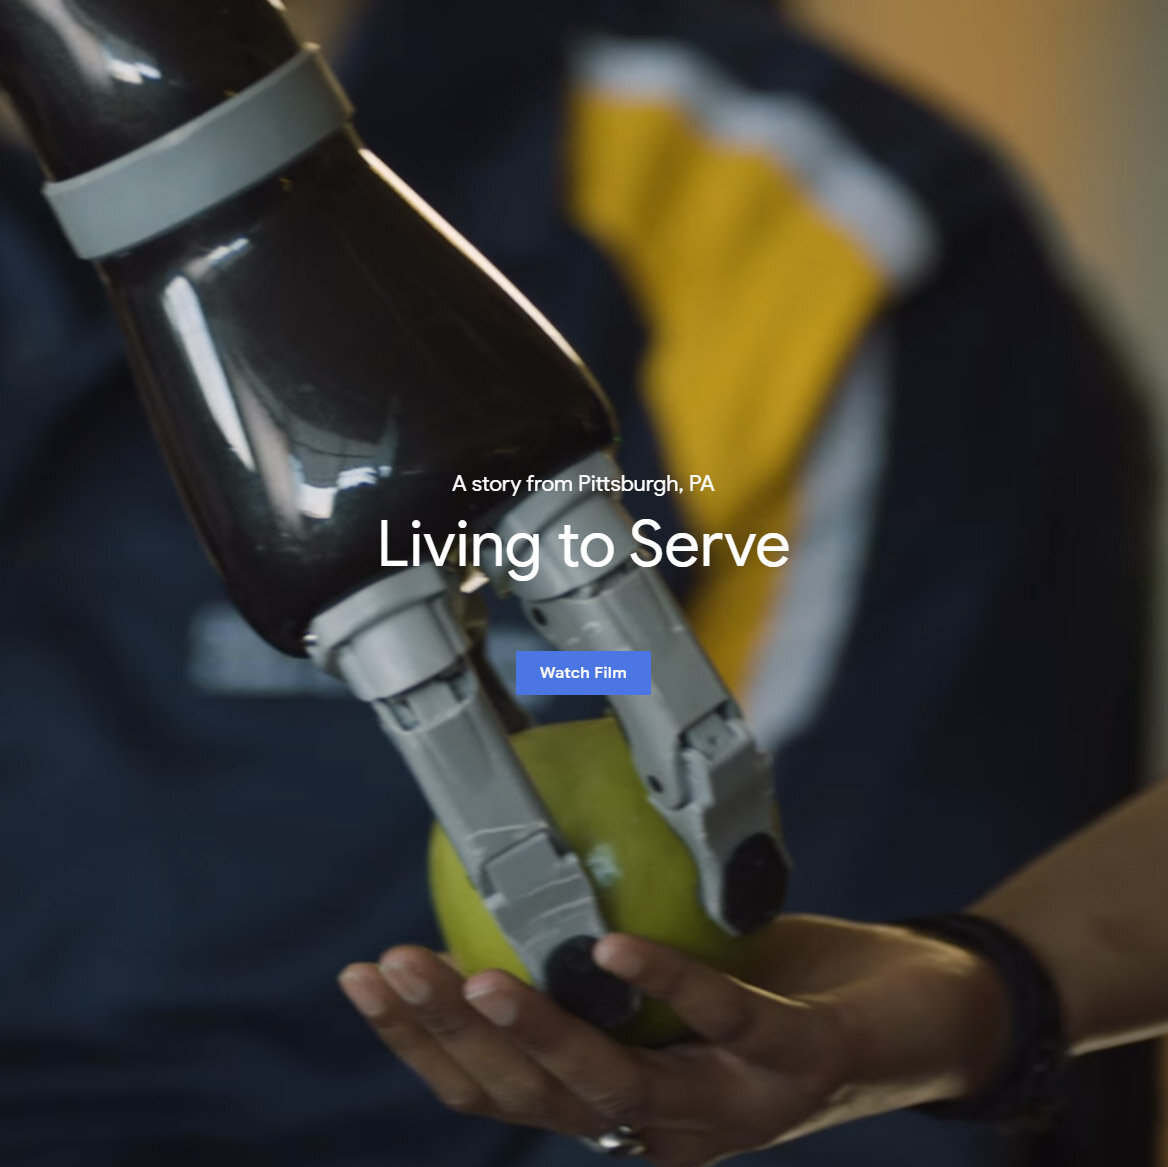   Living to Serve X Google (link)  